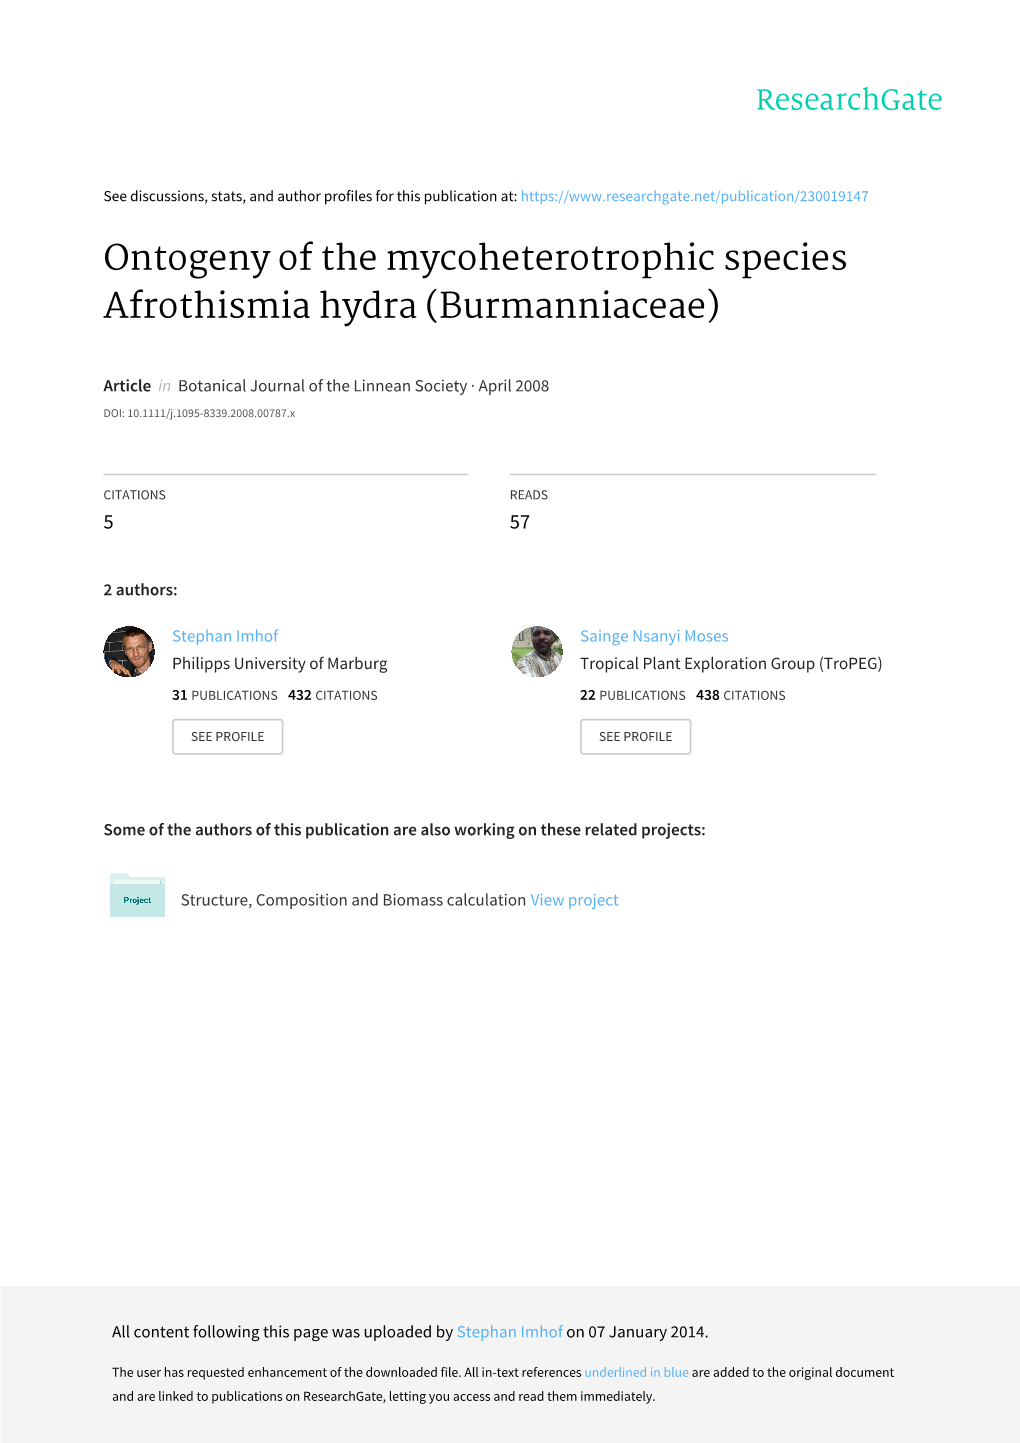 Ontogeny of the Mycoheterotrophic Species Afrothismia Hydra (Burmanniaceae)